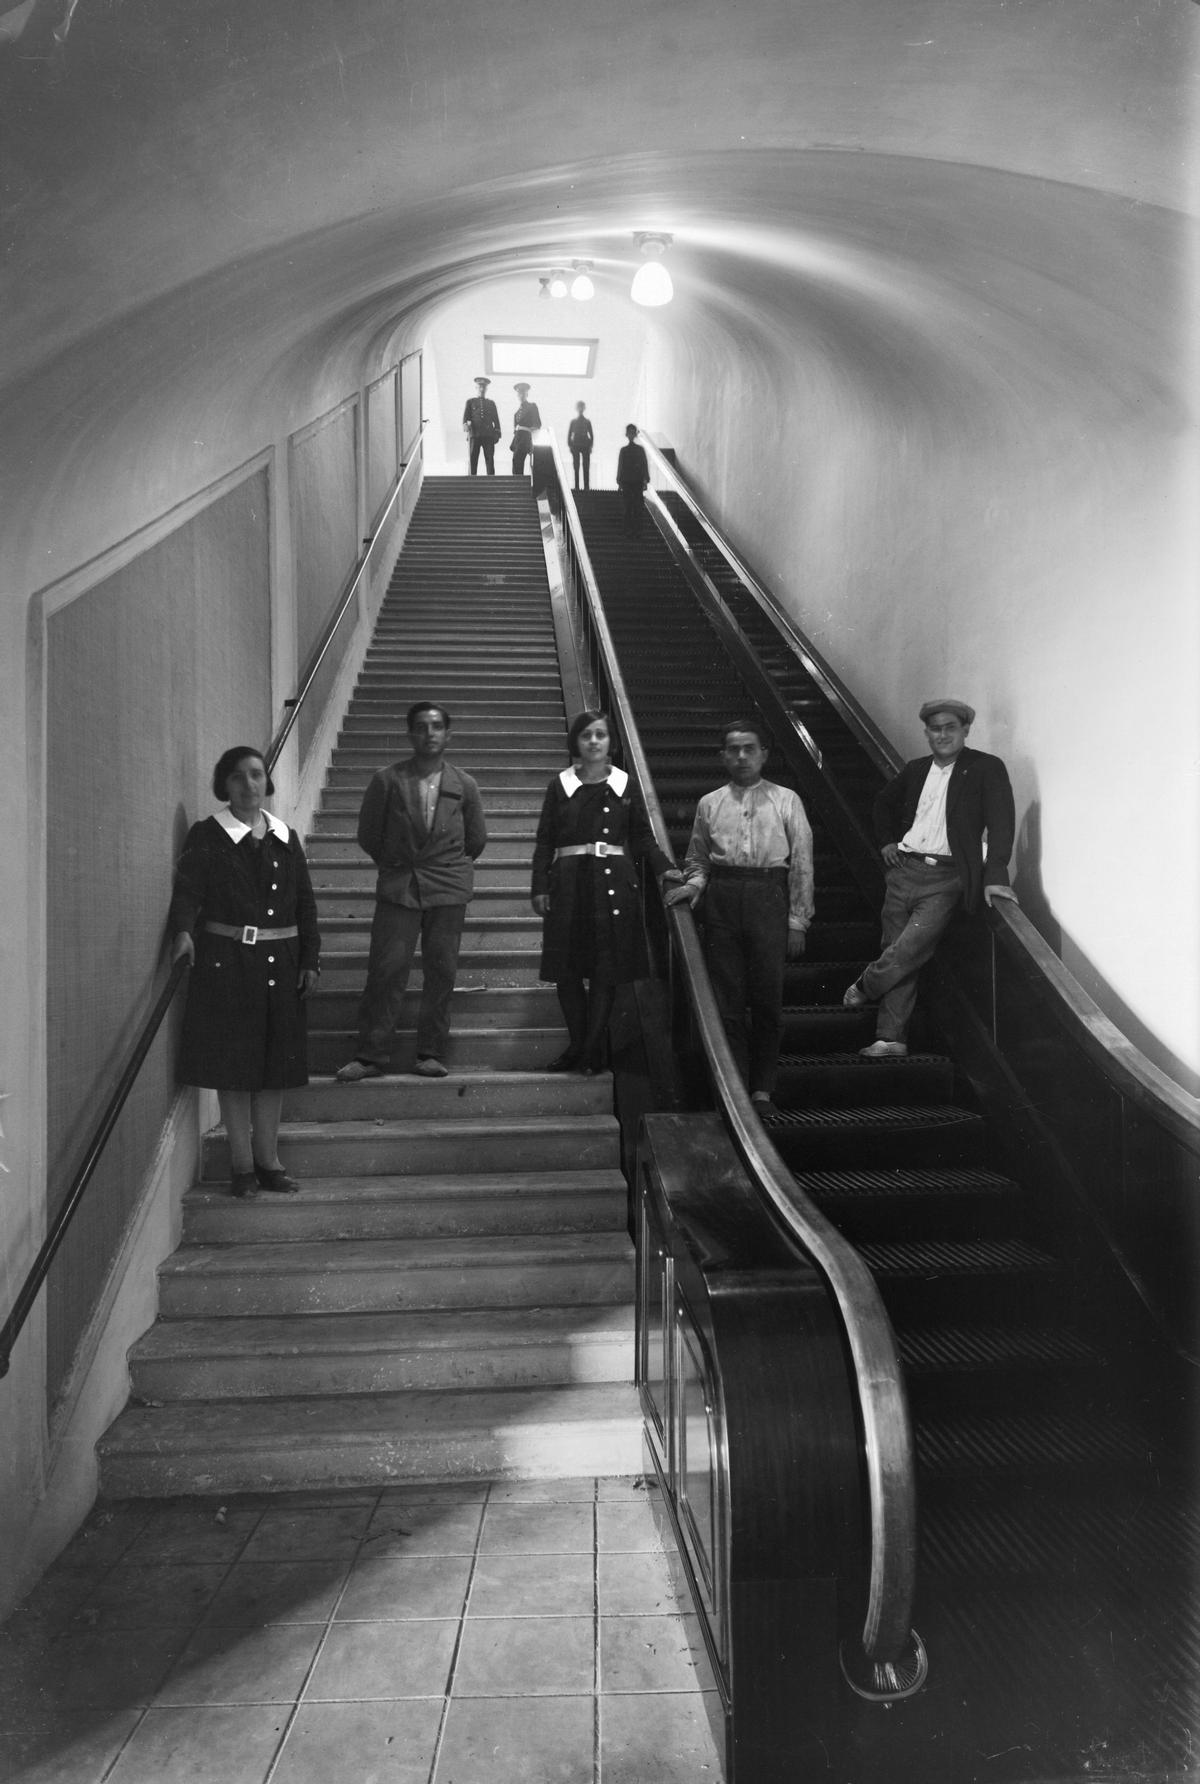 Escalera mecánica de la estación de Miramar con estructura de caoba en 1928-30